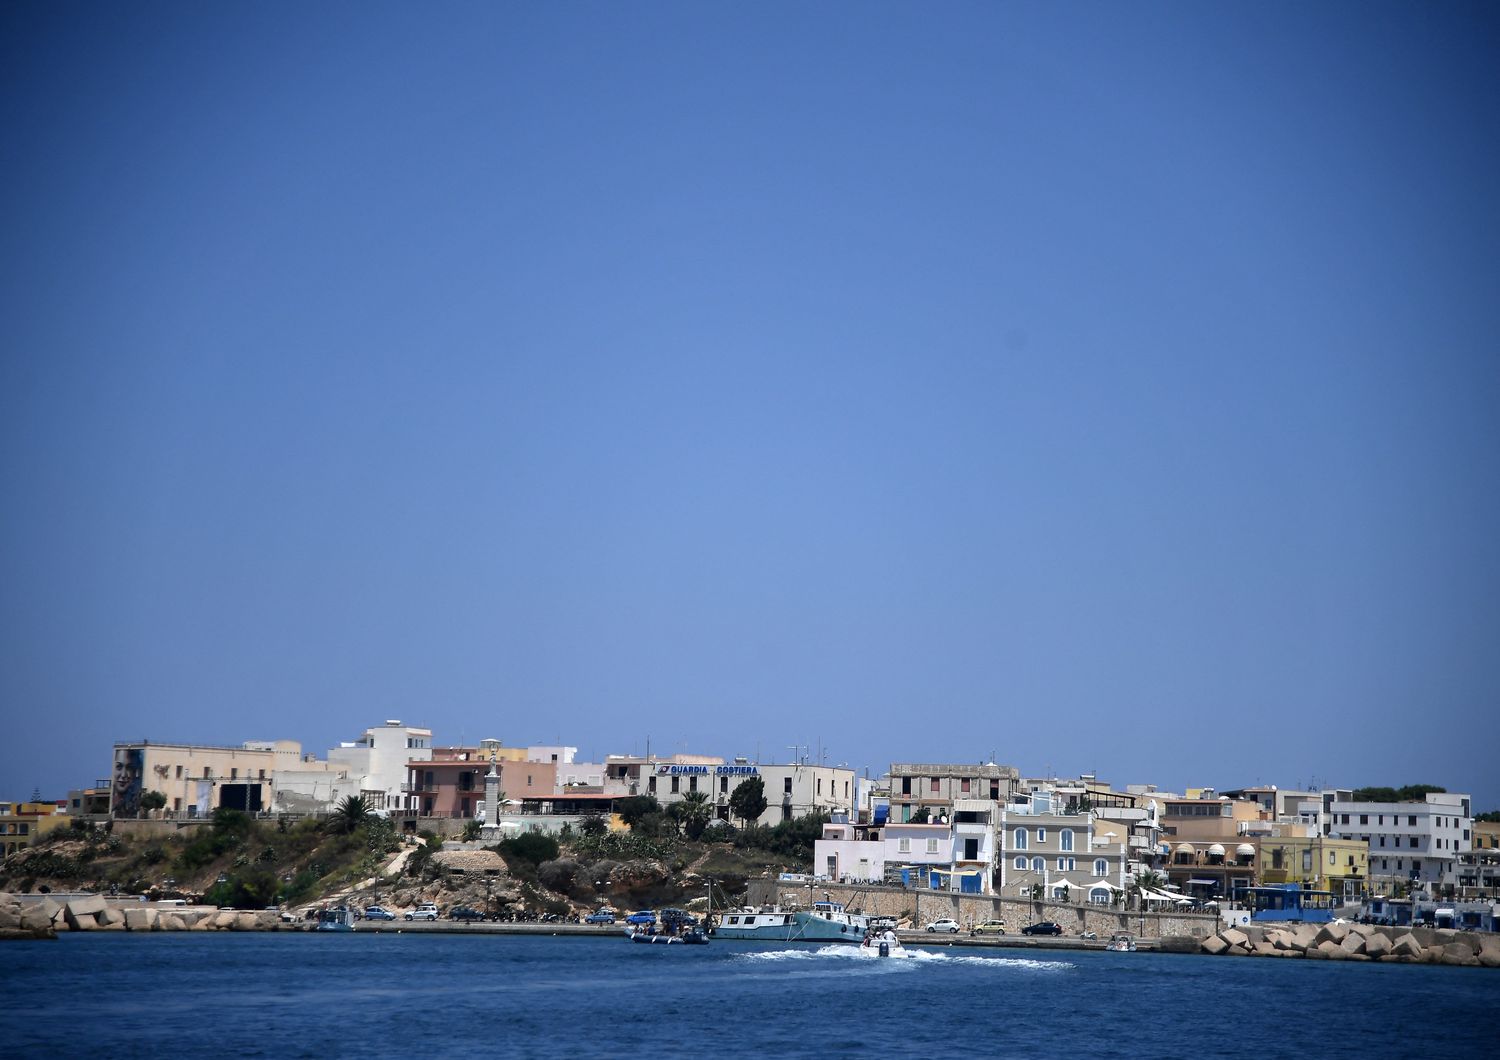 Isola di Lampedusa